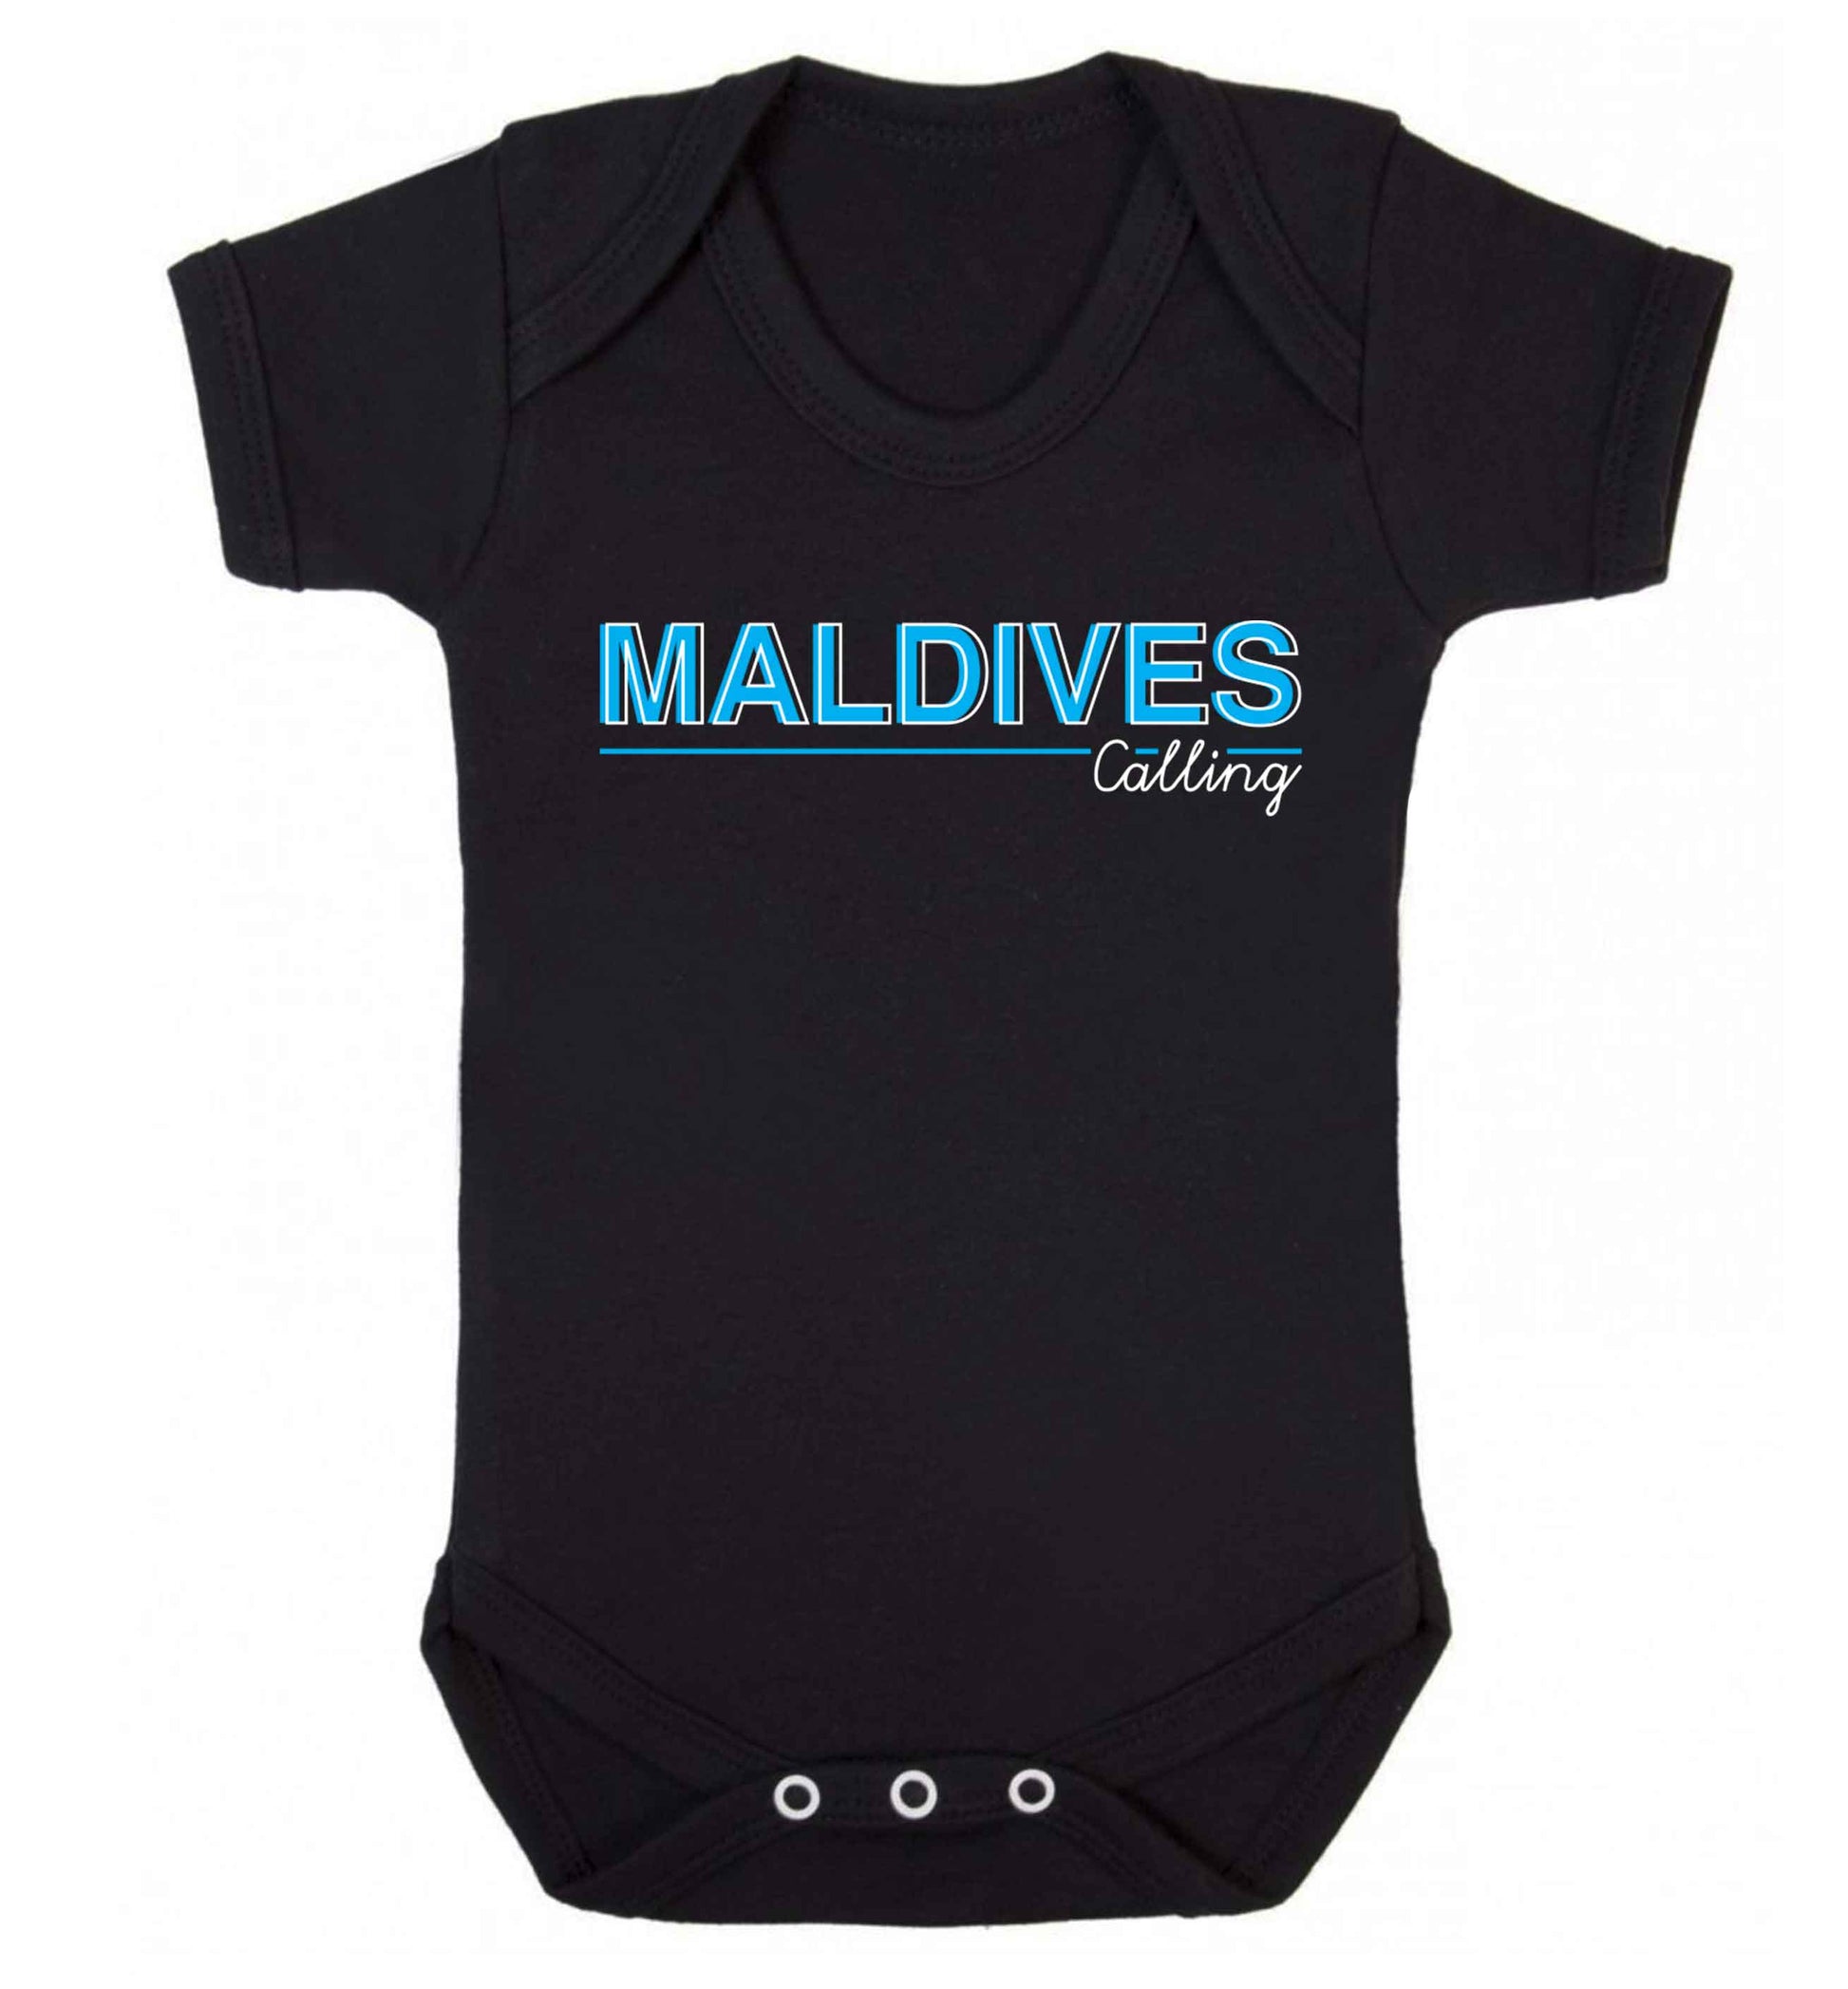 Maldives calling Baby Vest black 18-24 months